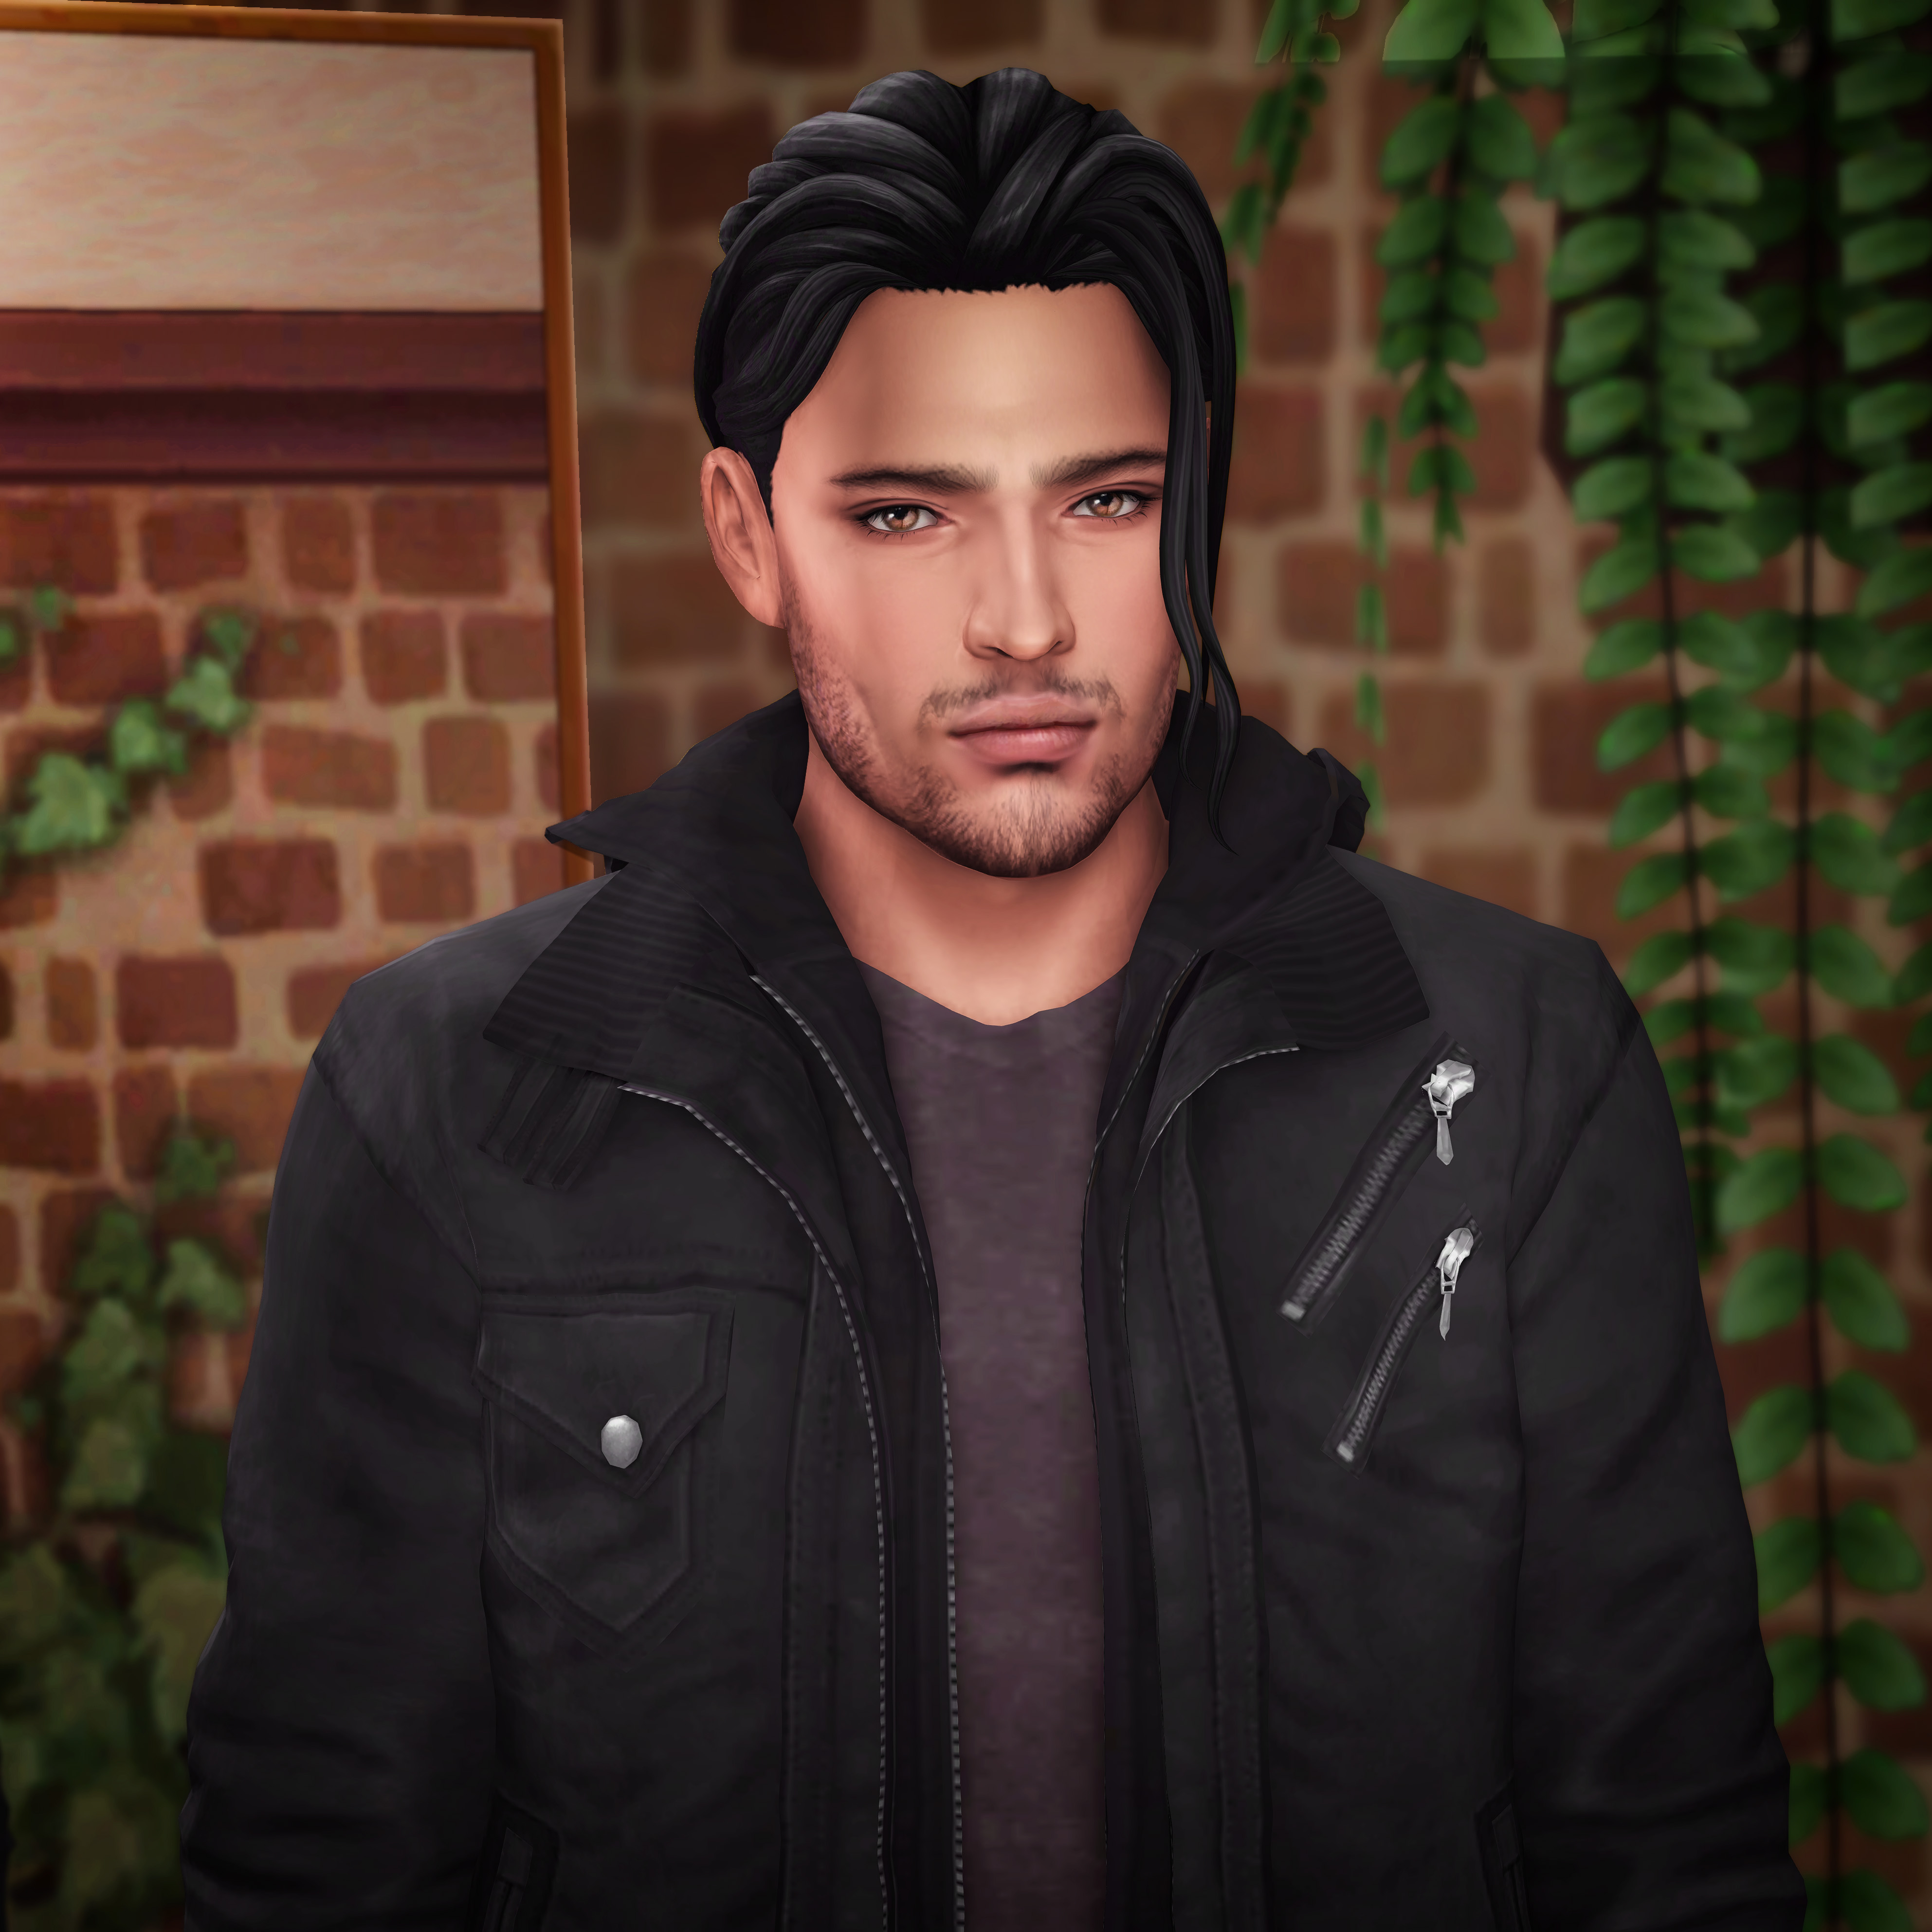 Rafael - Screenshots - The Sims 4 Sims / Households - CurseForge